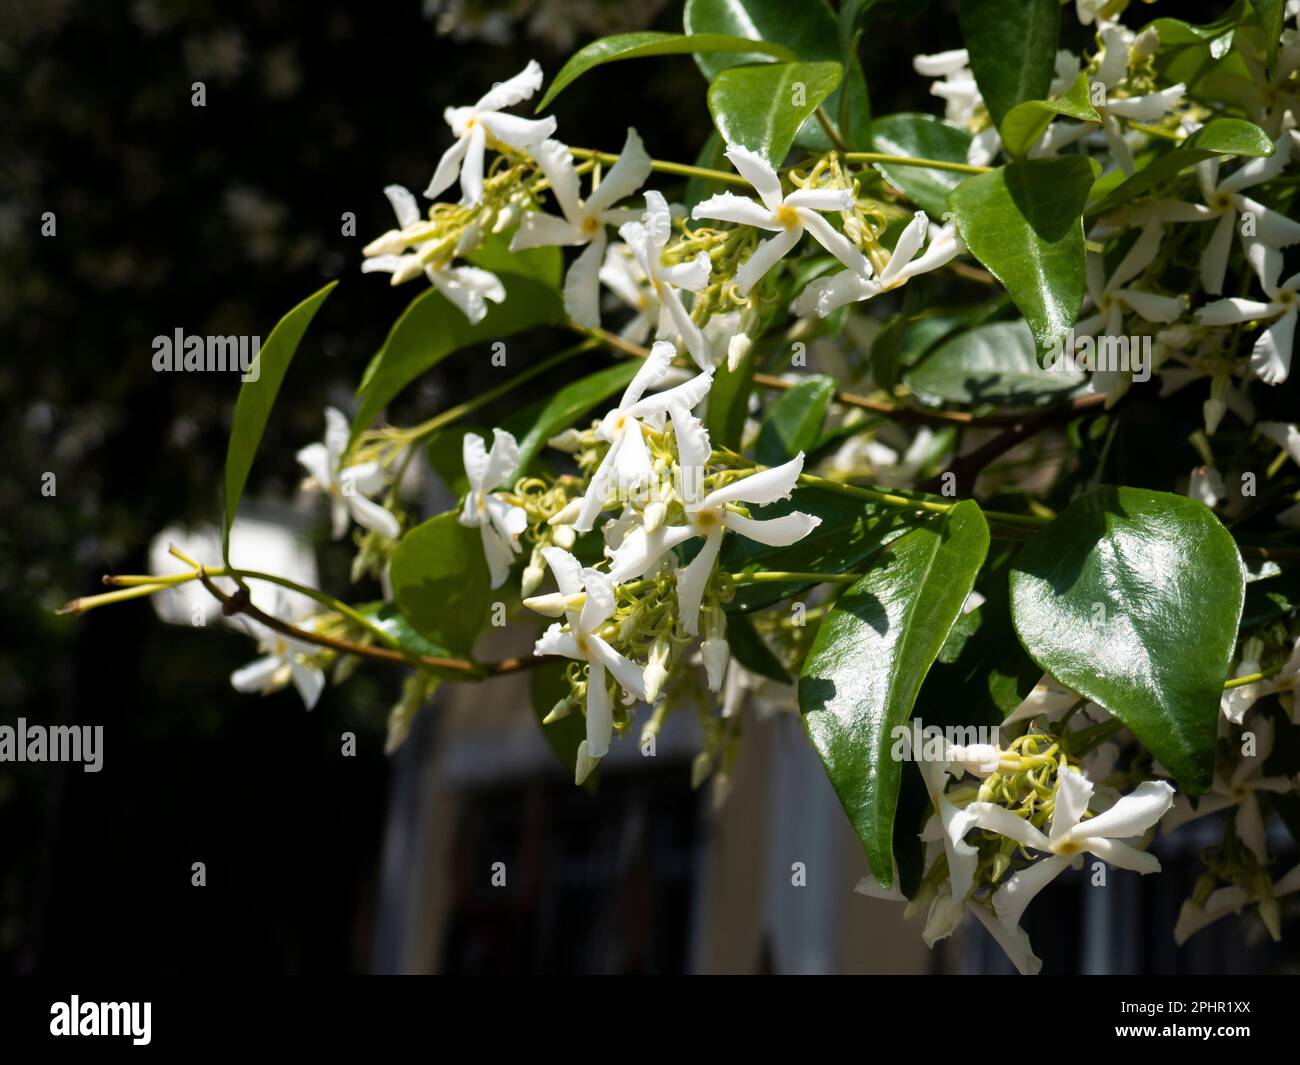 Star jasmine flowers on a blooming bush Stock Photo